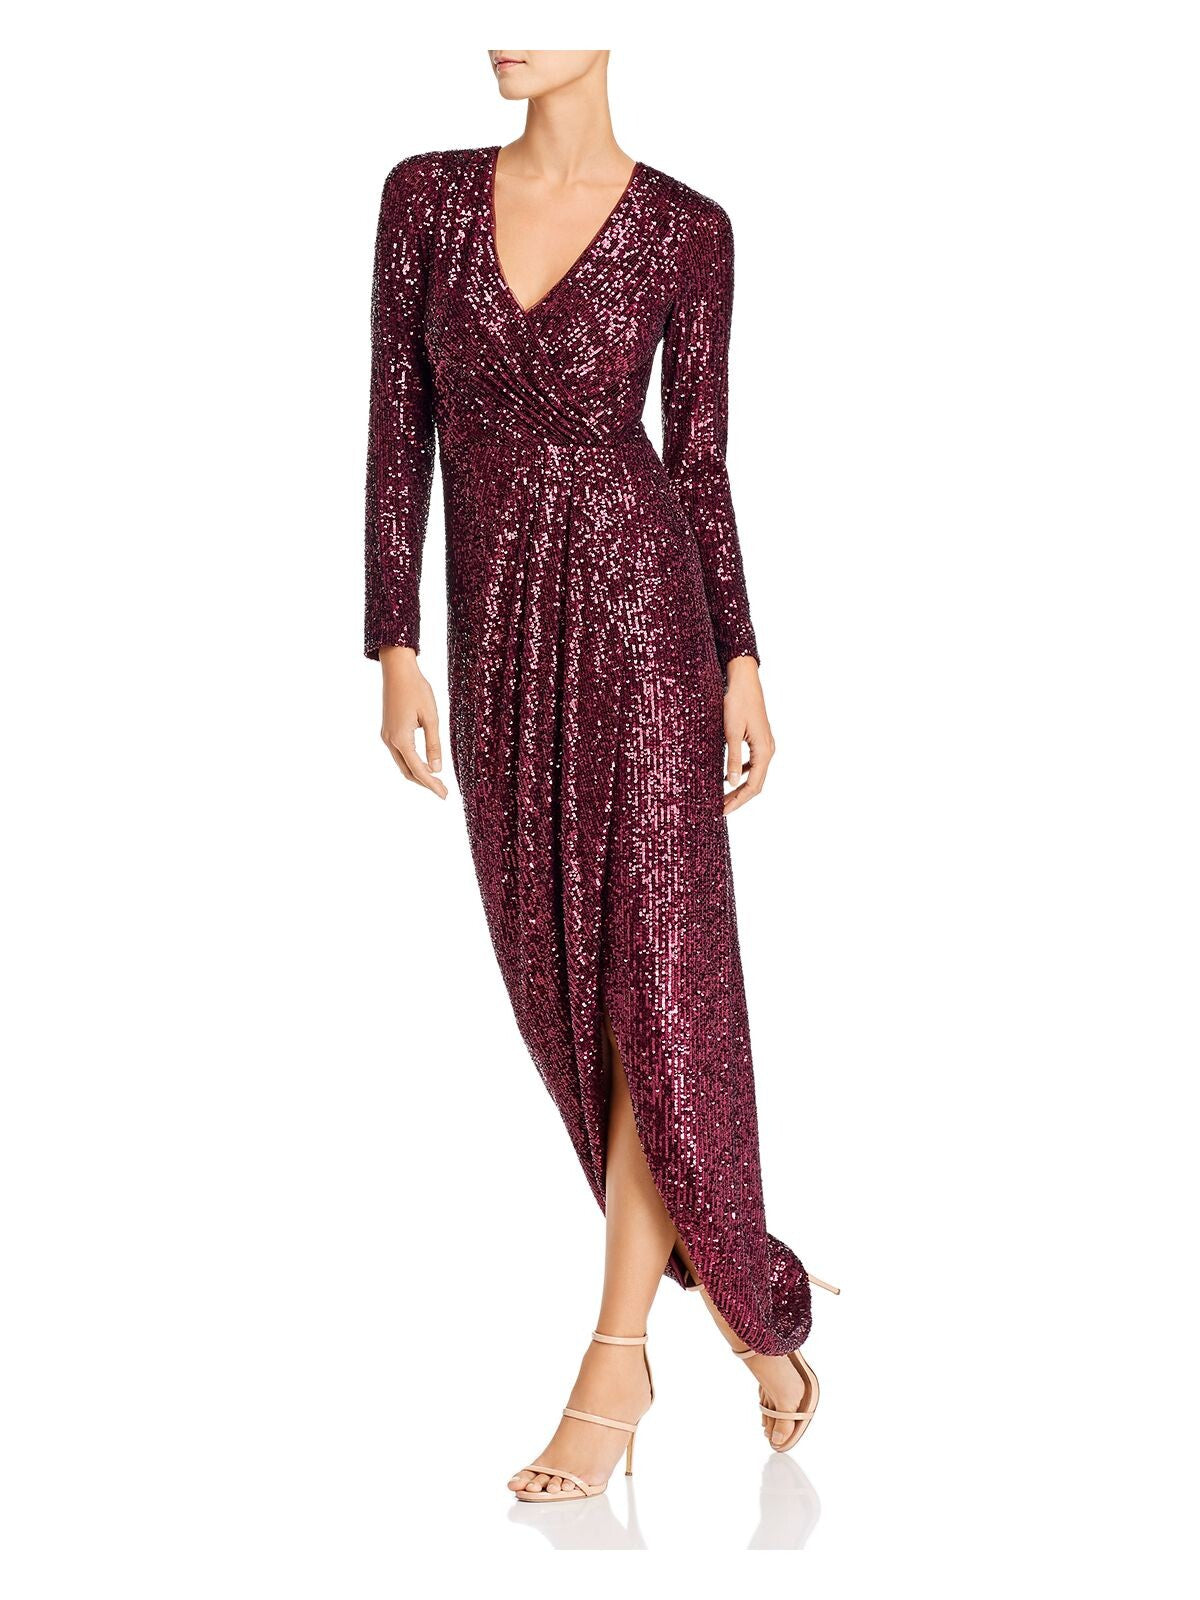 AQUA DRESSES Womens Burgundy Sequined Lined Long Sleeve Surplice Neckline Full-Length Evening Faux Wrap Dress 0